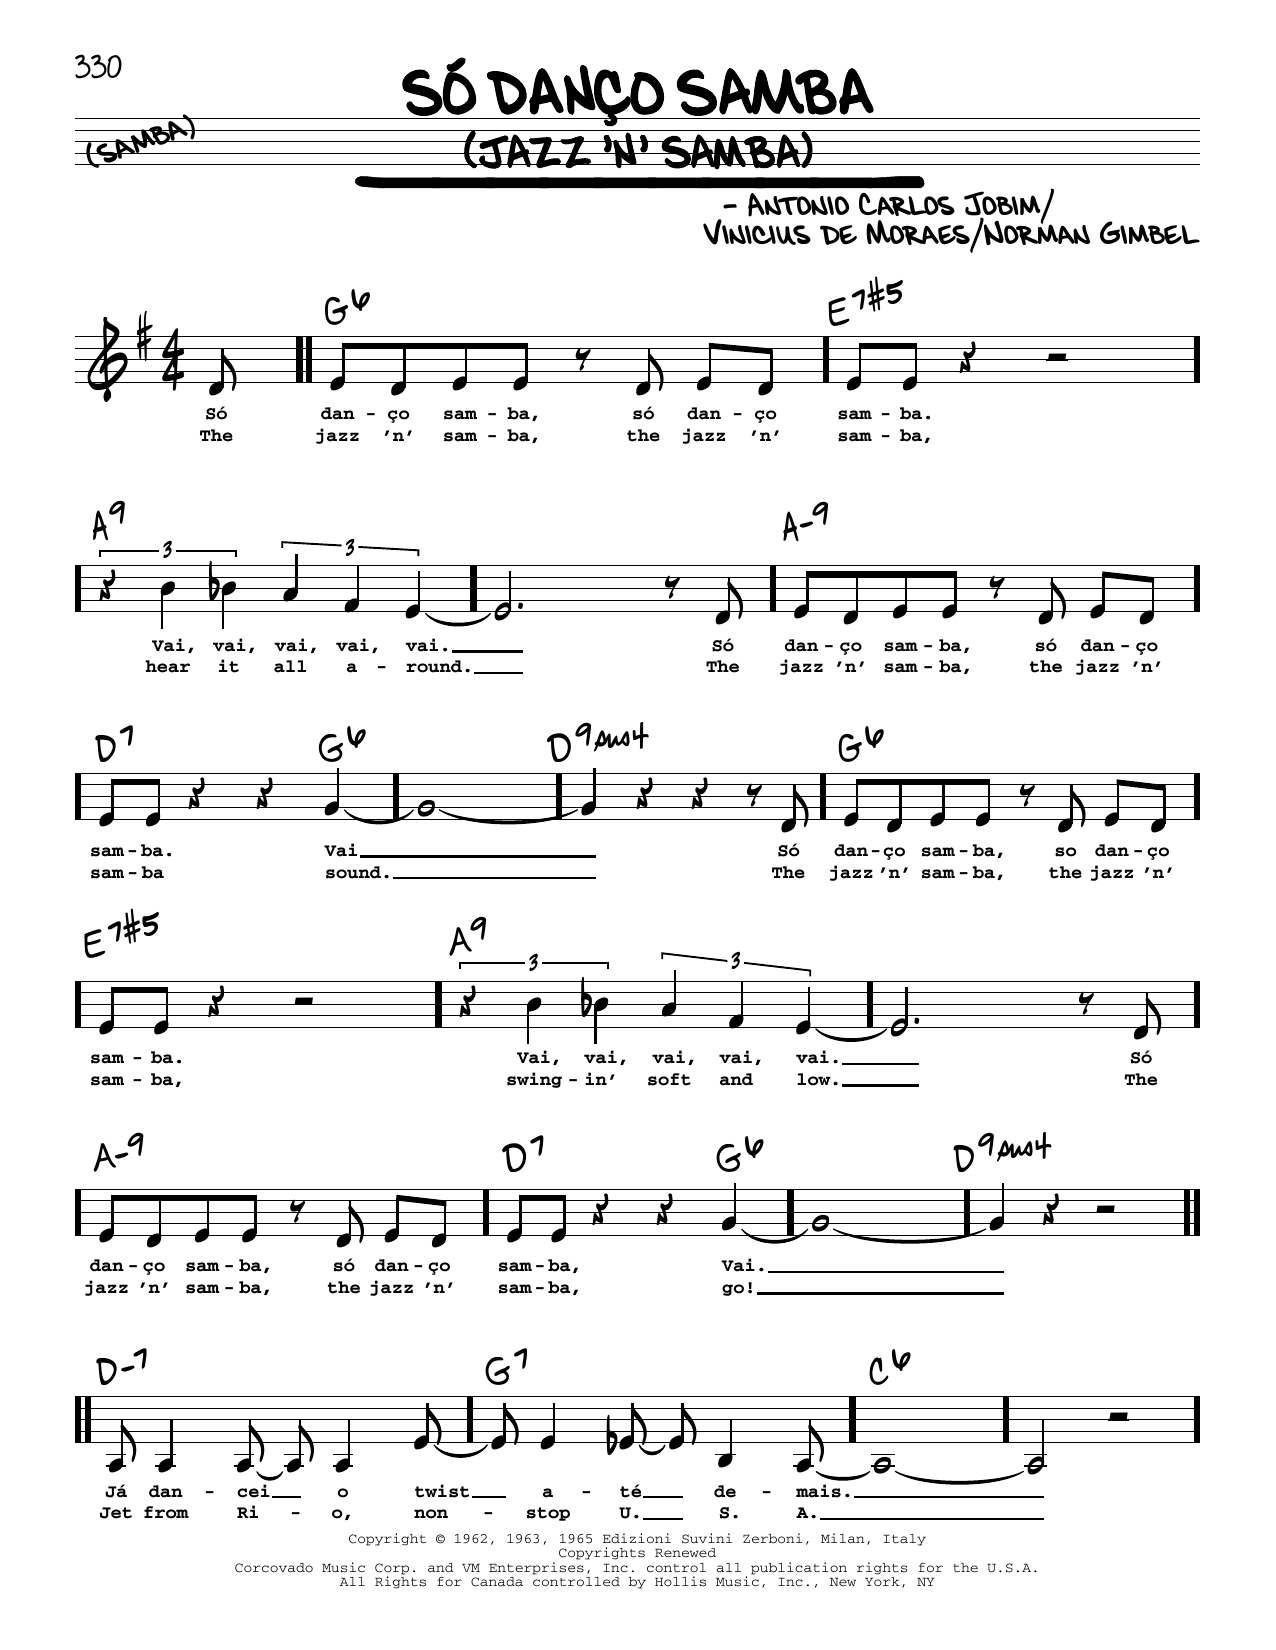 Download Antonio Carlos Jobim Jazz 'N' Samba (So Danco Samba) (Low Voice) Sheet Music and learn how to play Real Book – Melody, Lyrics & Chords PDF digital score in minutes